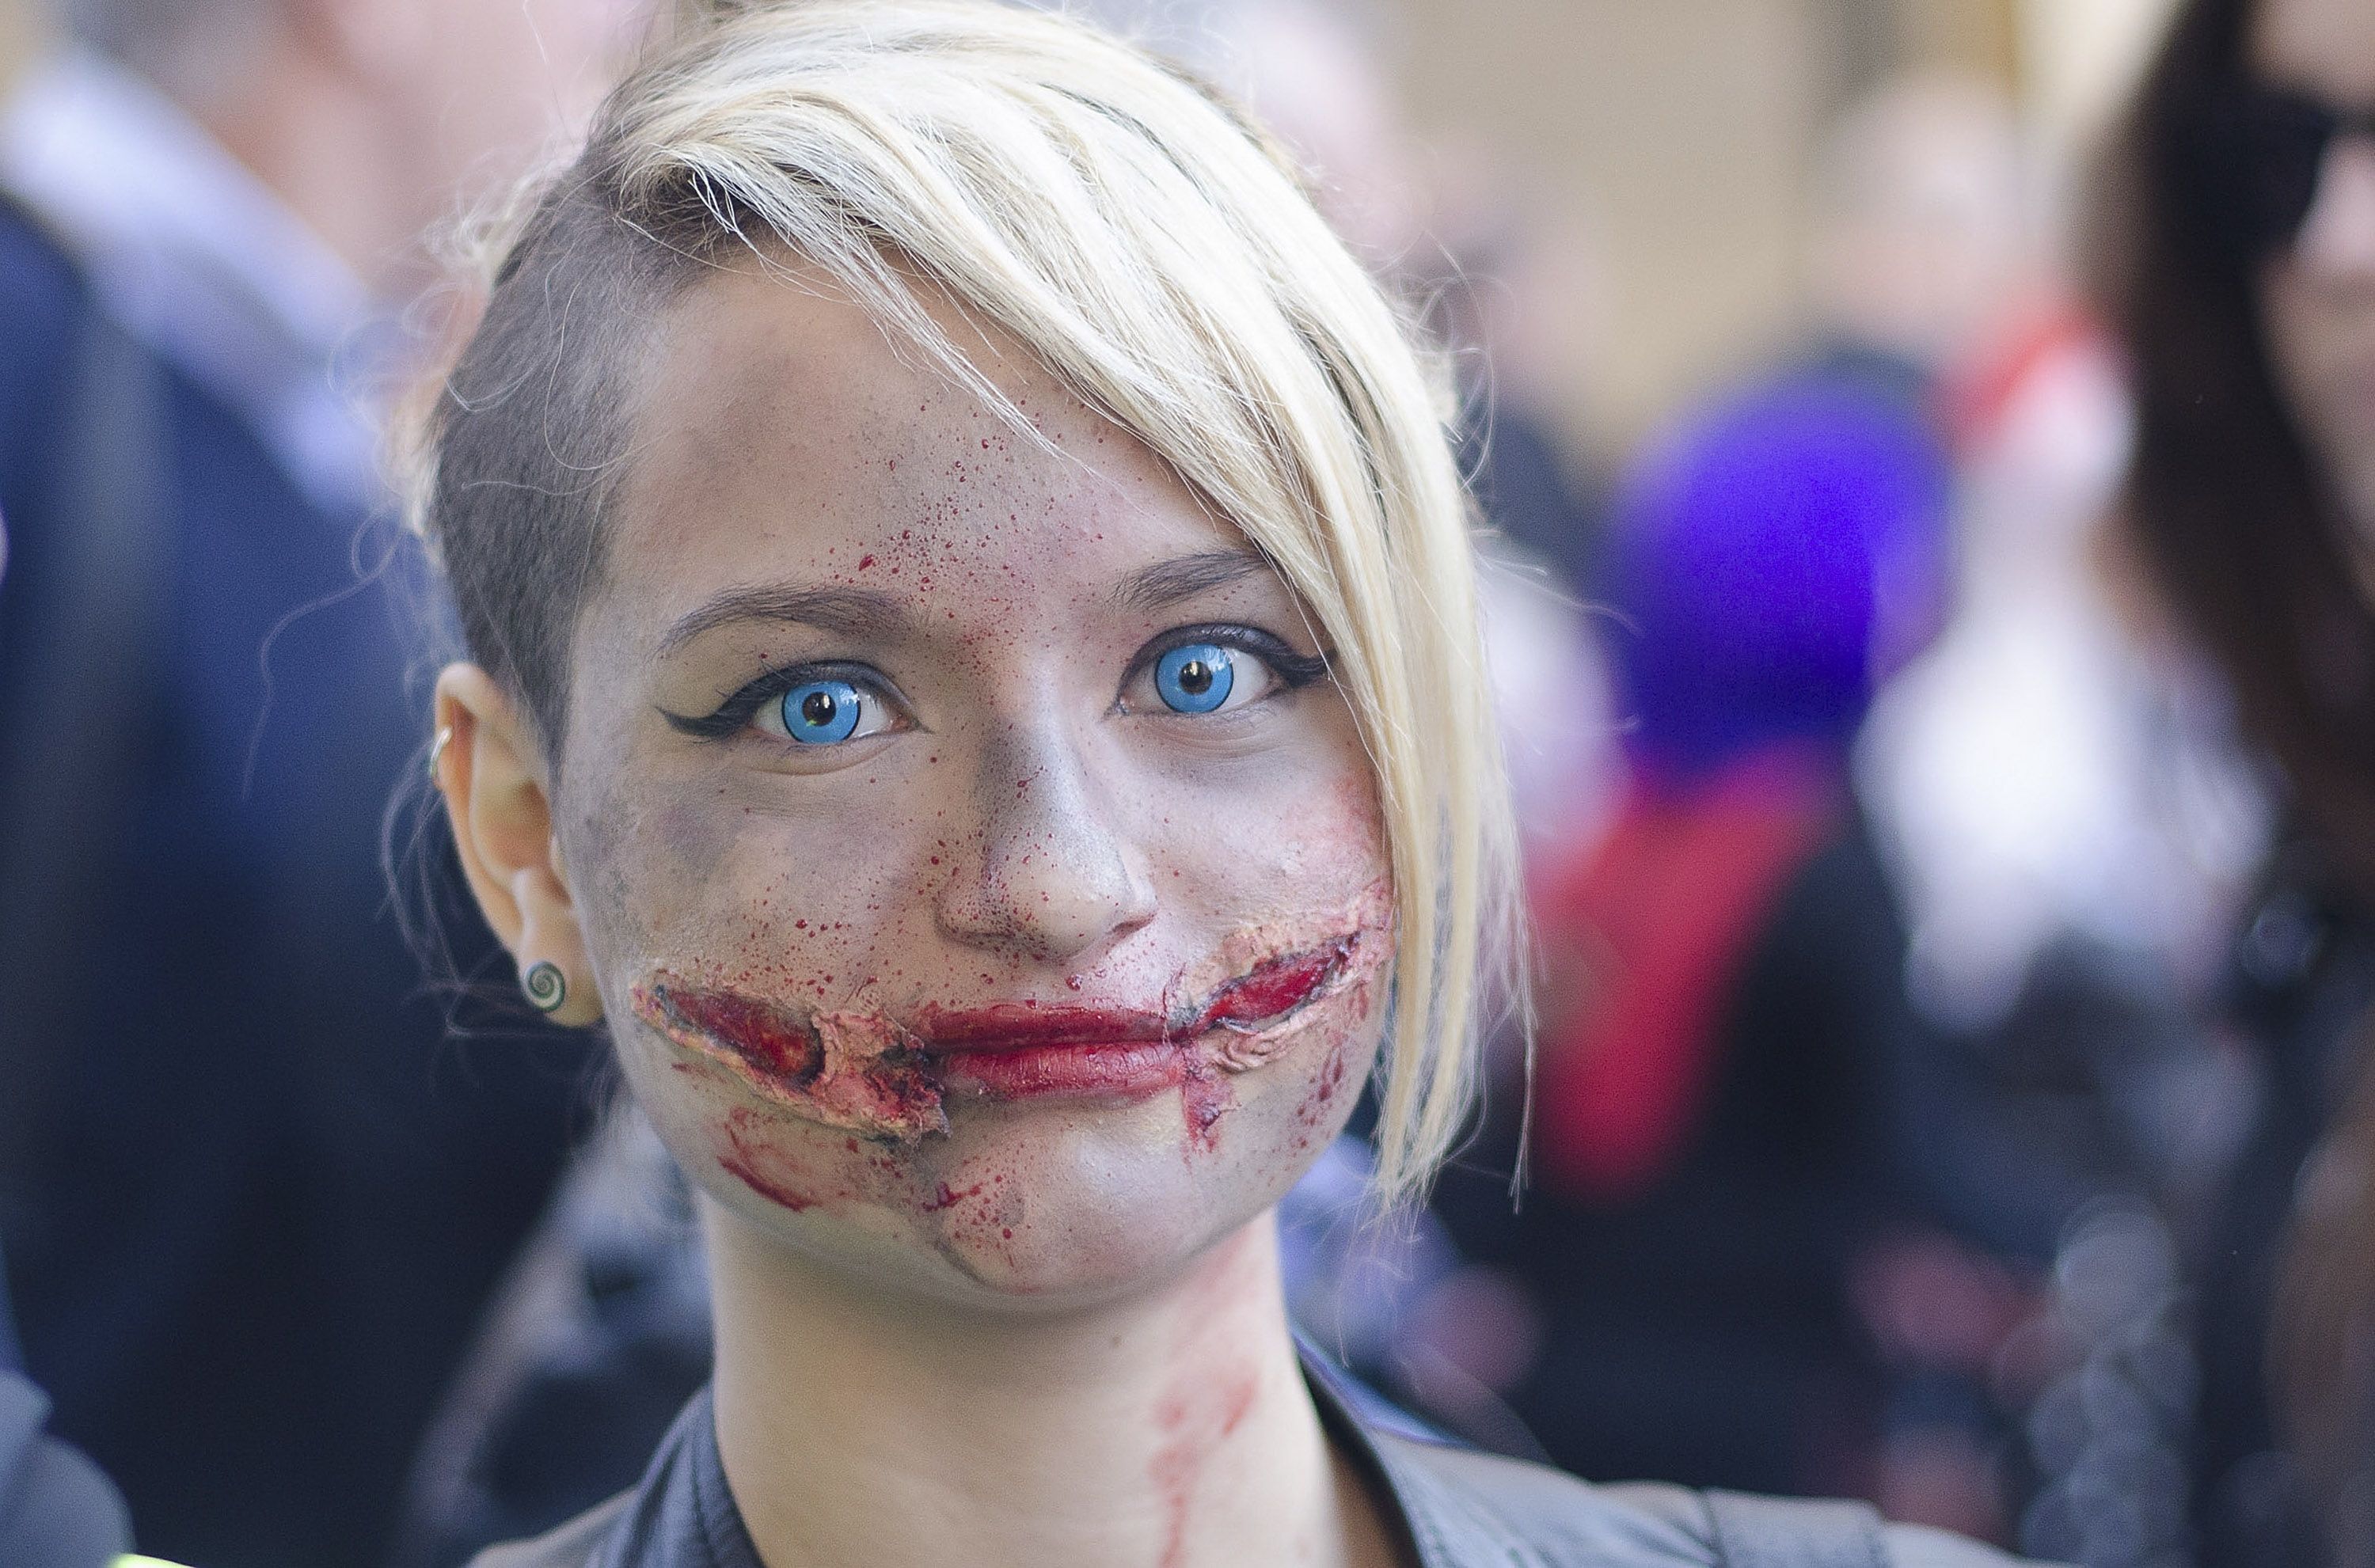 4 Gruesome Halloween Makeup Tips From Film Industry Makeup Artists